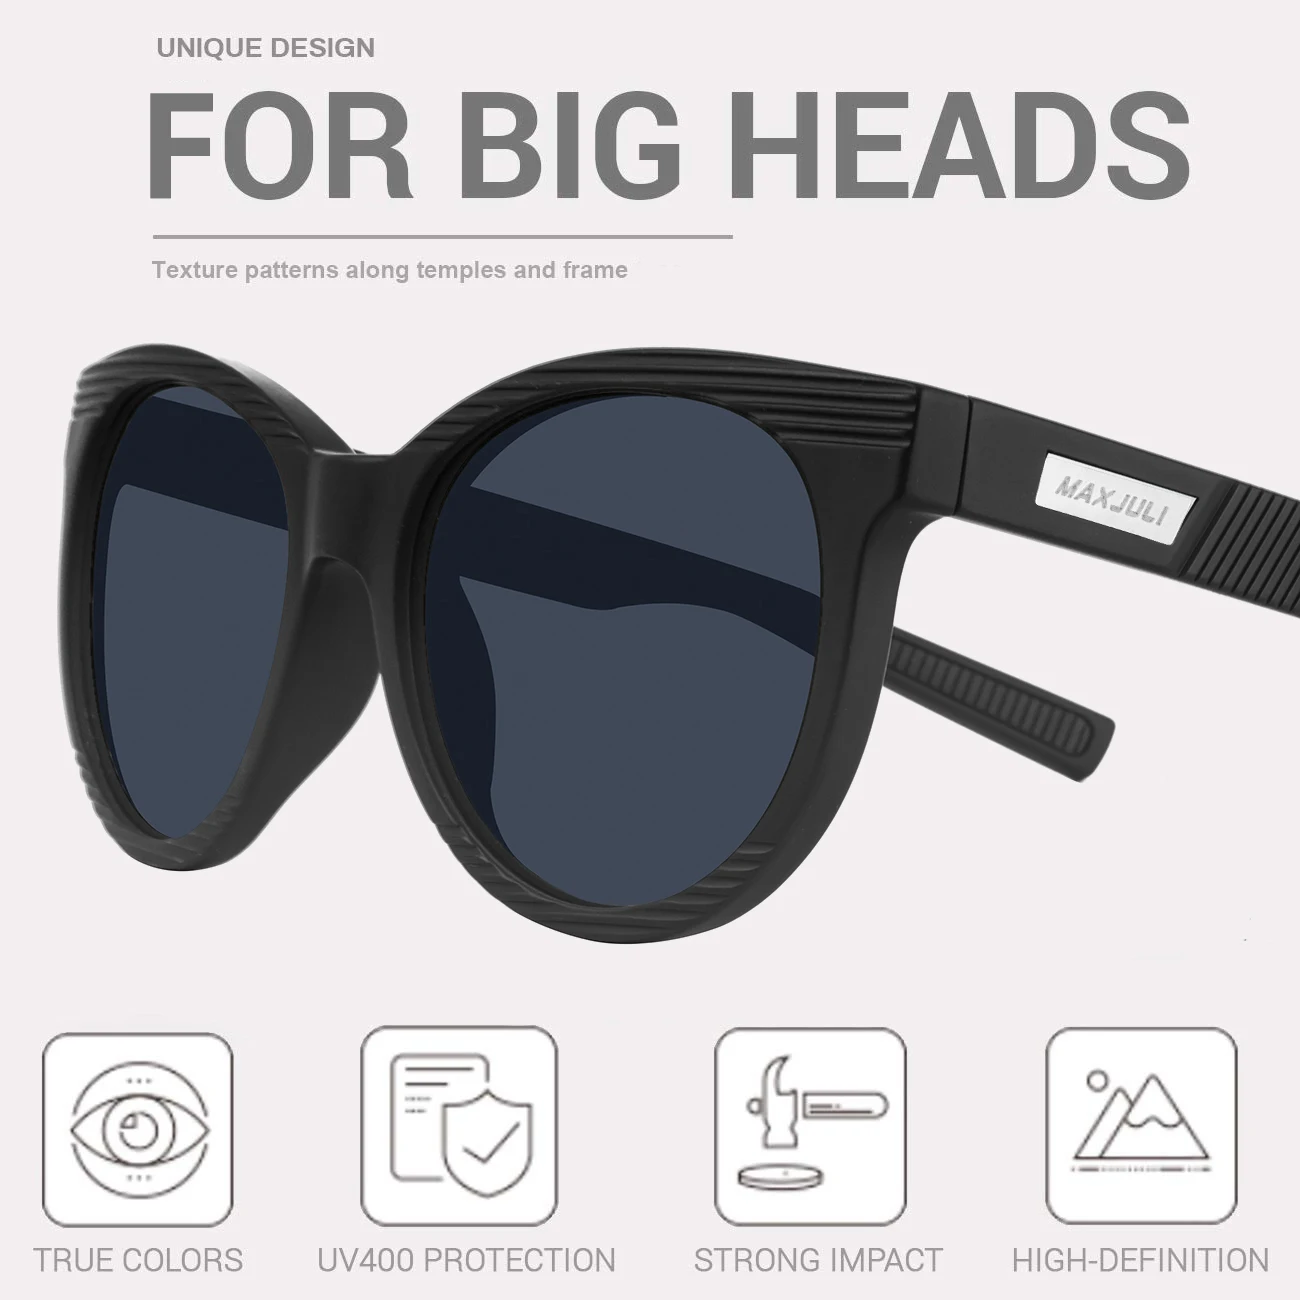 https://ae01.alicdn.com/kf/S305781dcd8124184b91a4381753563ebx/MAXJULI-Polarized-Round-Sunglasses-for-Women-Men-with-Big-Heads-Sun-Glasses-UV-Protection-Fishing-Eyewear.jpg